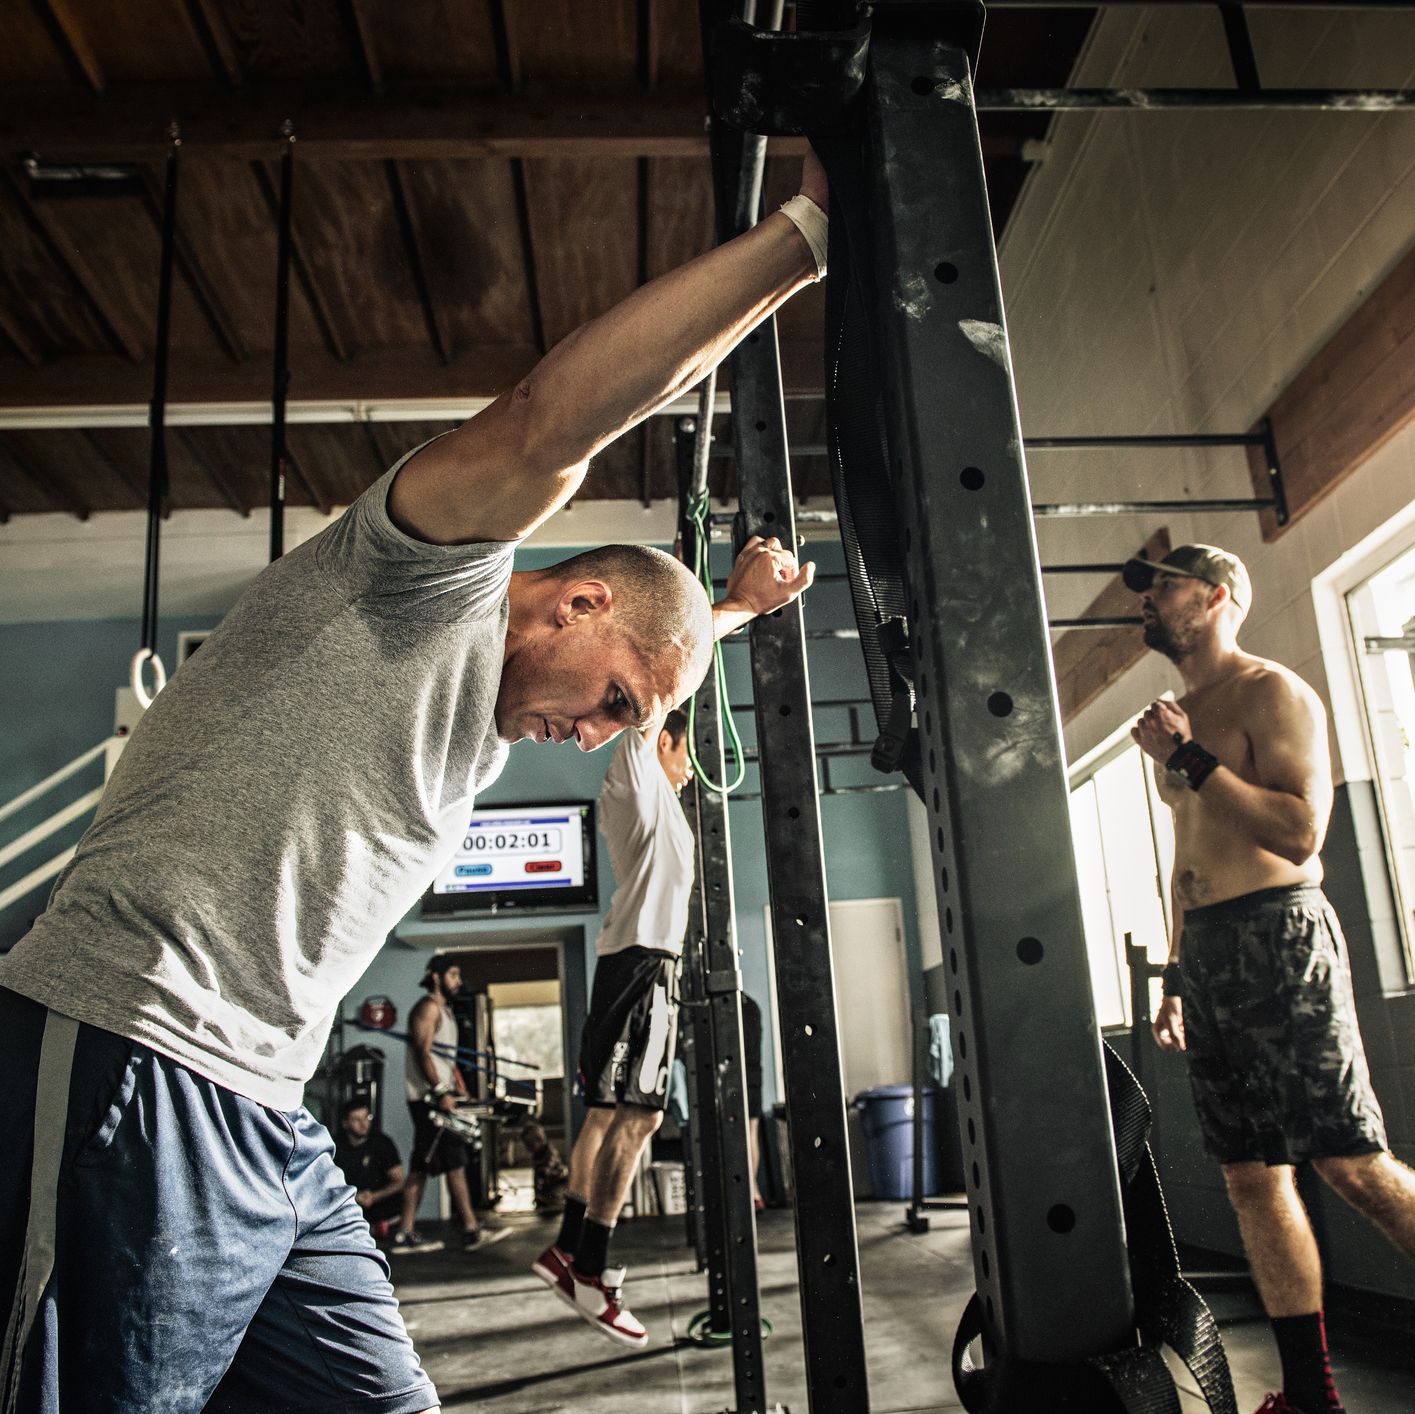 Men training on exercise bar in gymnasium